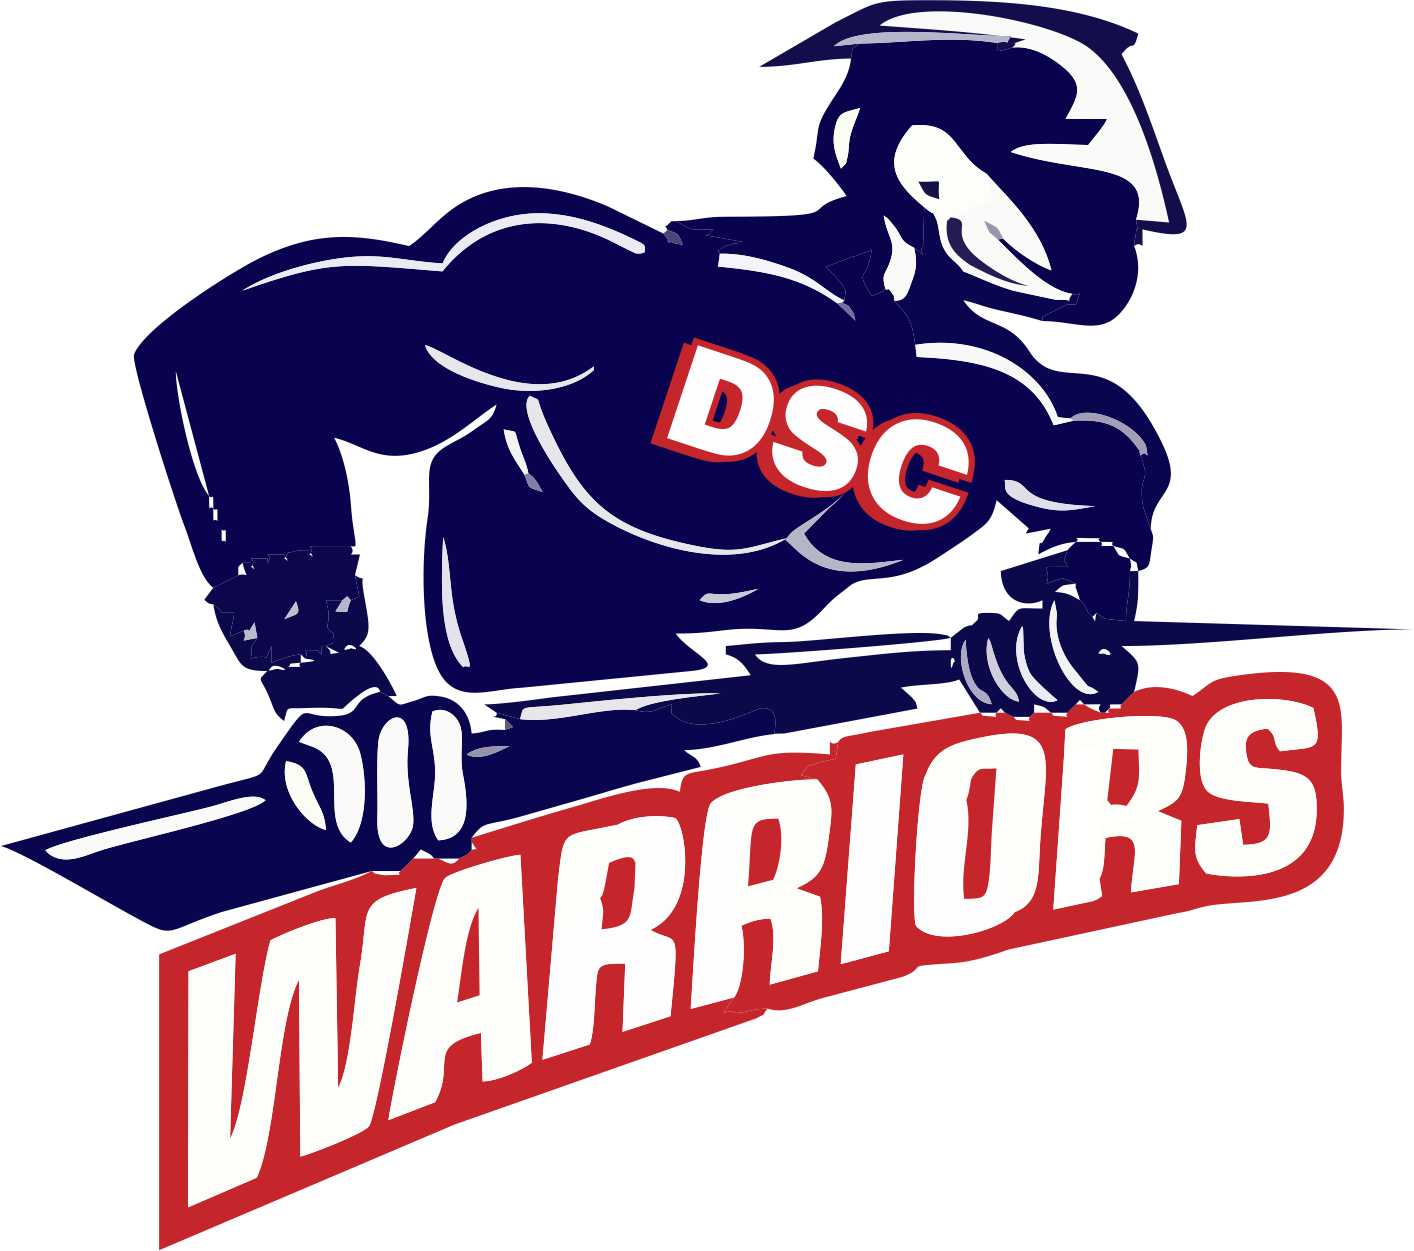 DSC Warriors